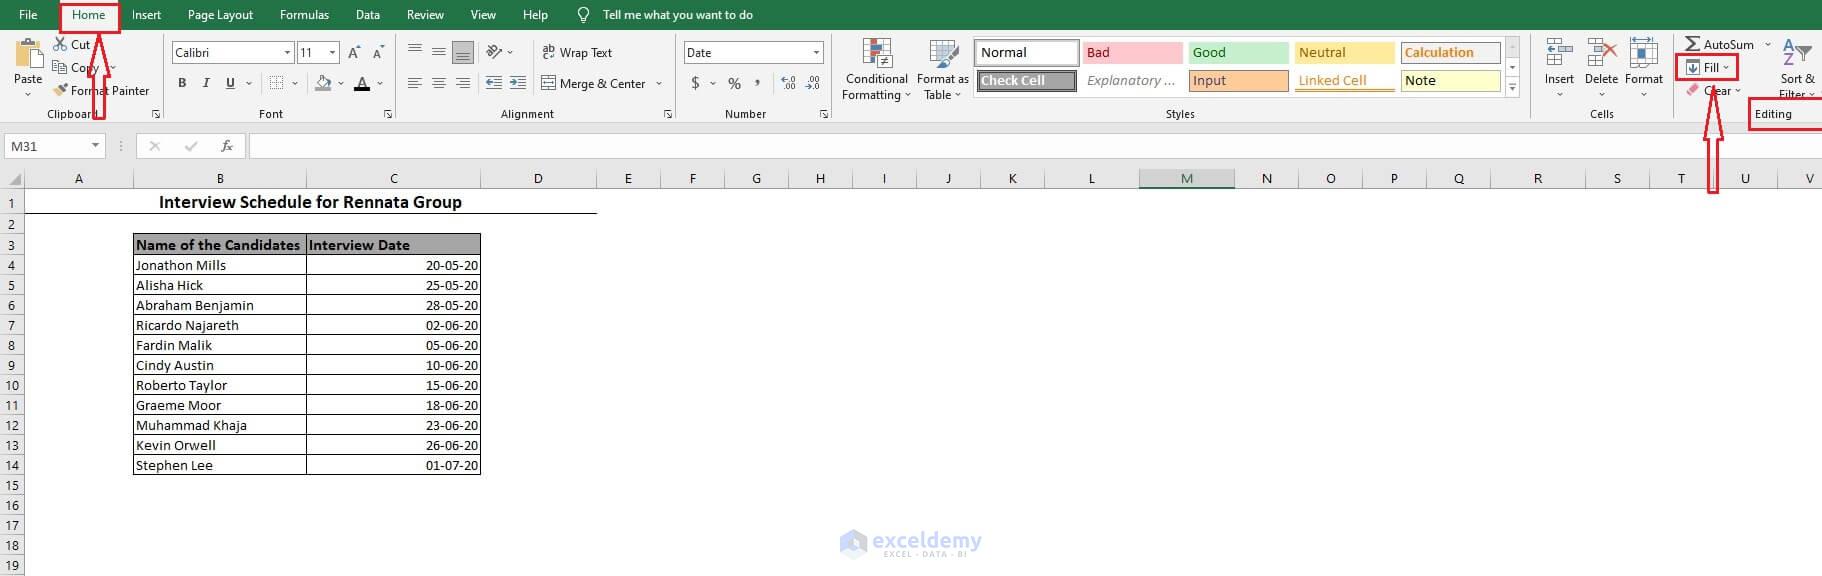 Fill Option in Excel Toolbar